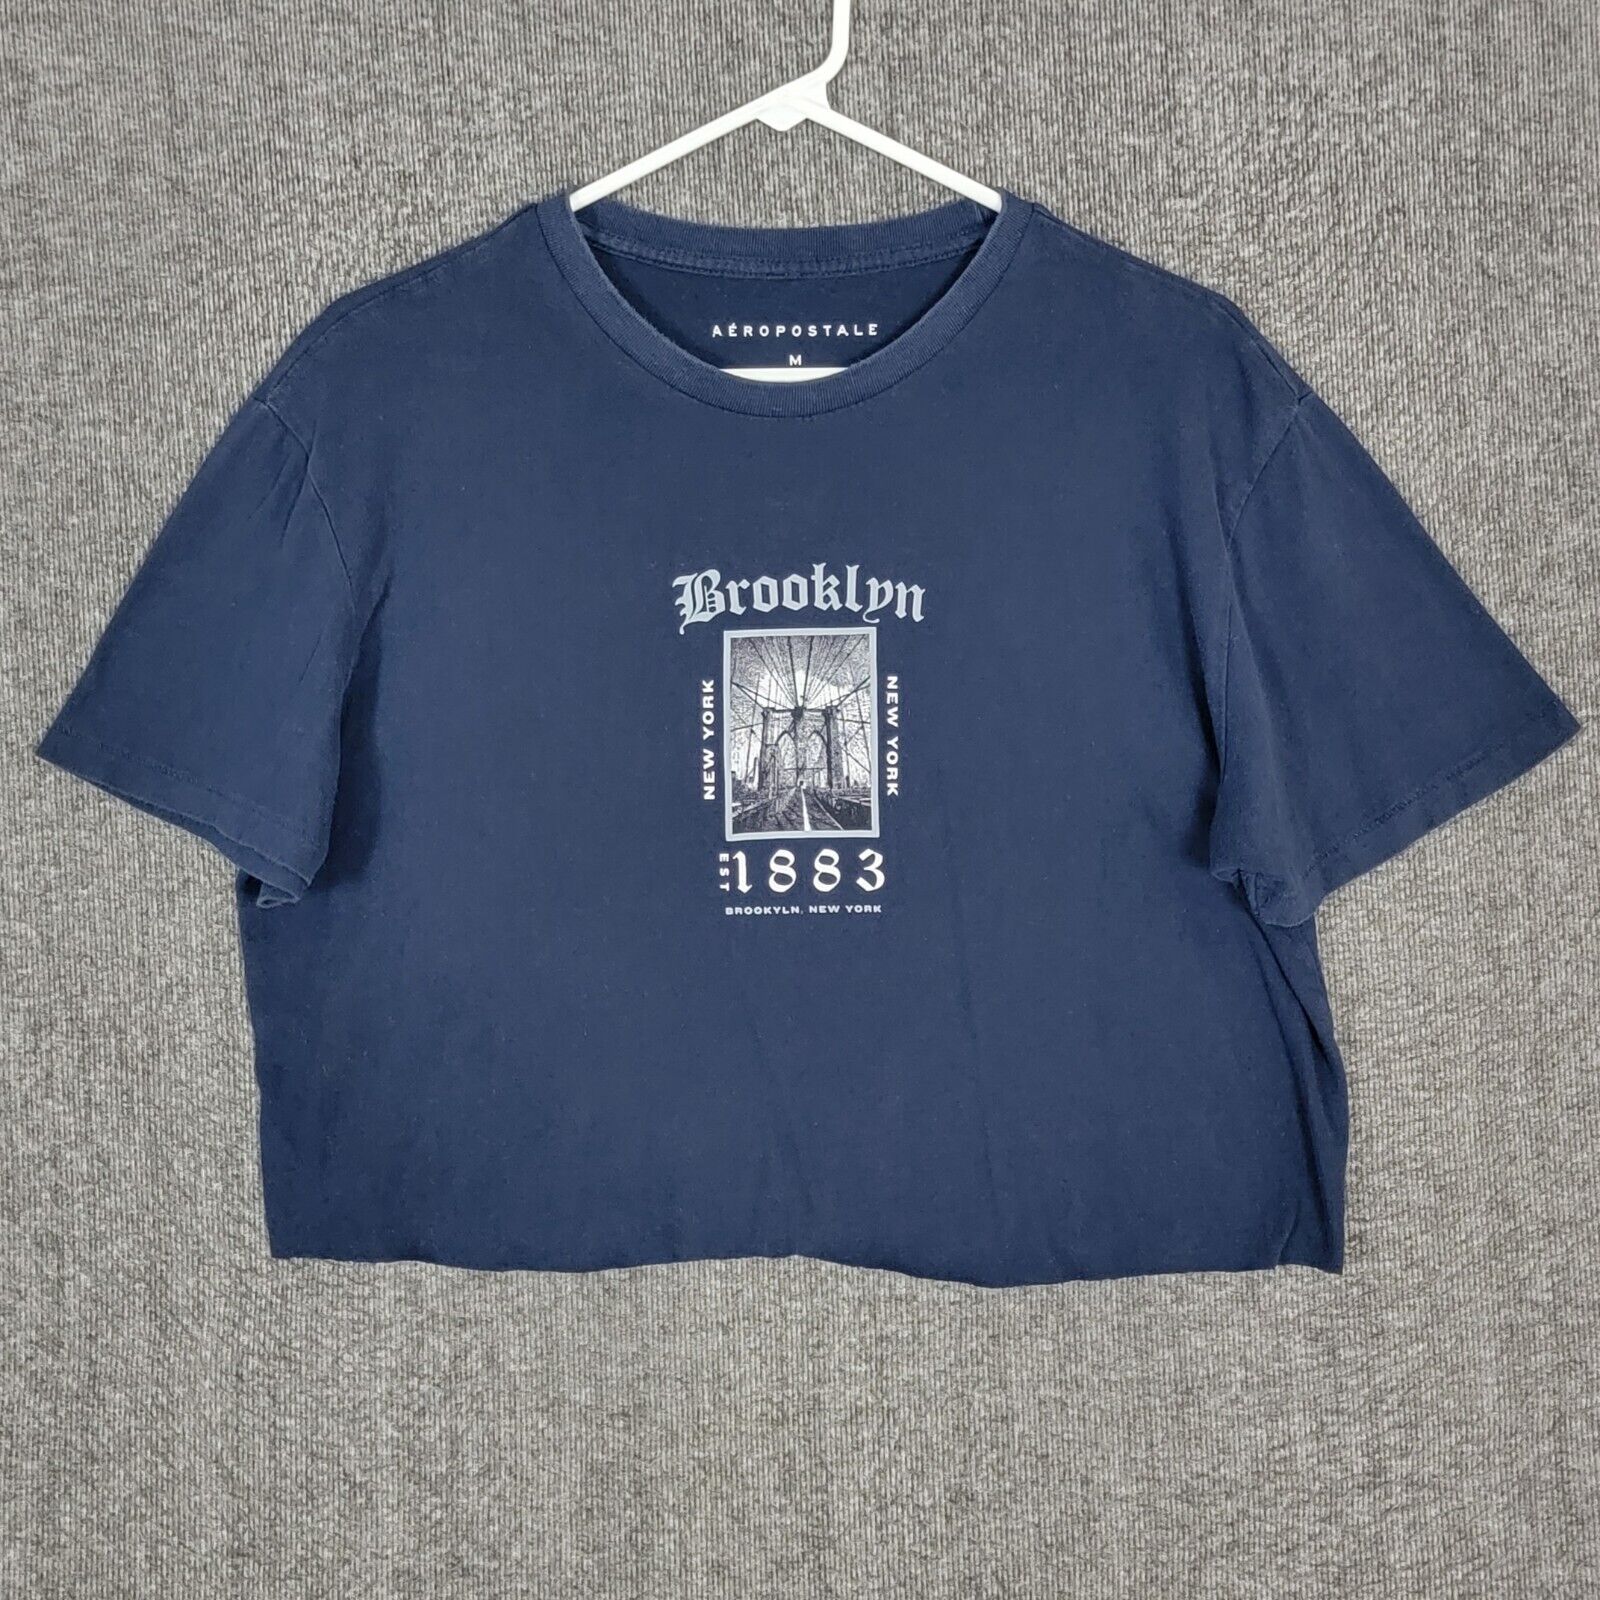 Aeropostale T-Shirt Mens Medium Blue Brooklyn Bridge NY 1883 Short Sleeve Crop